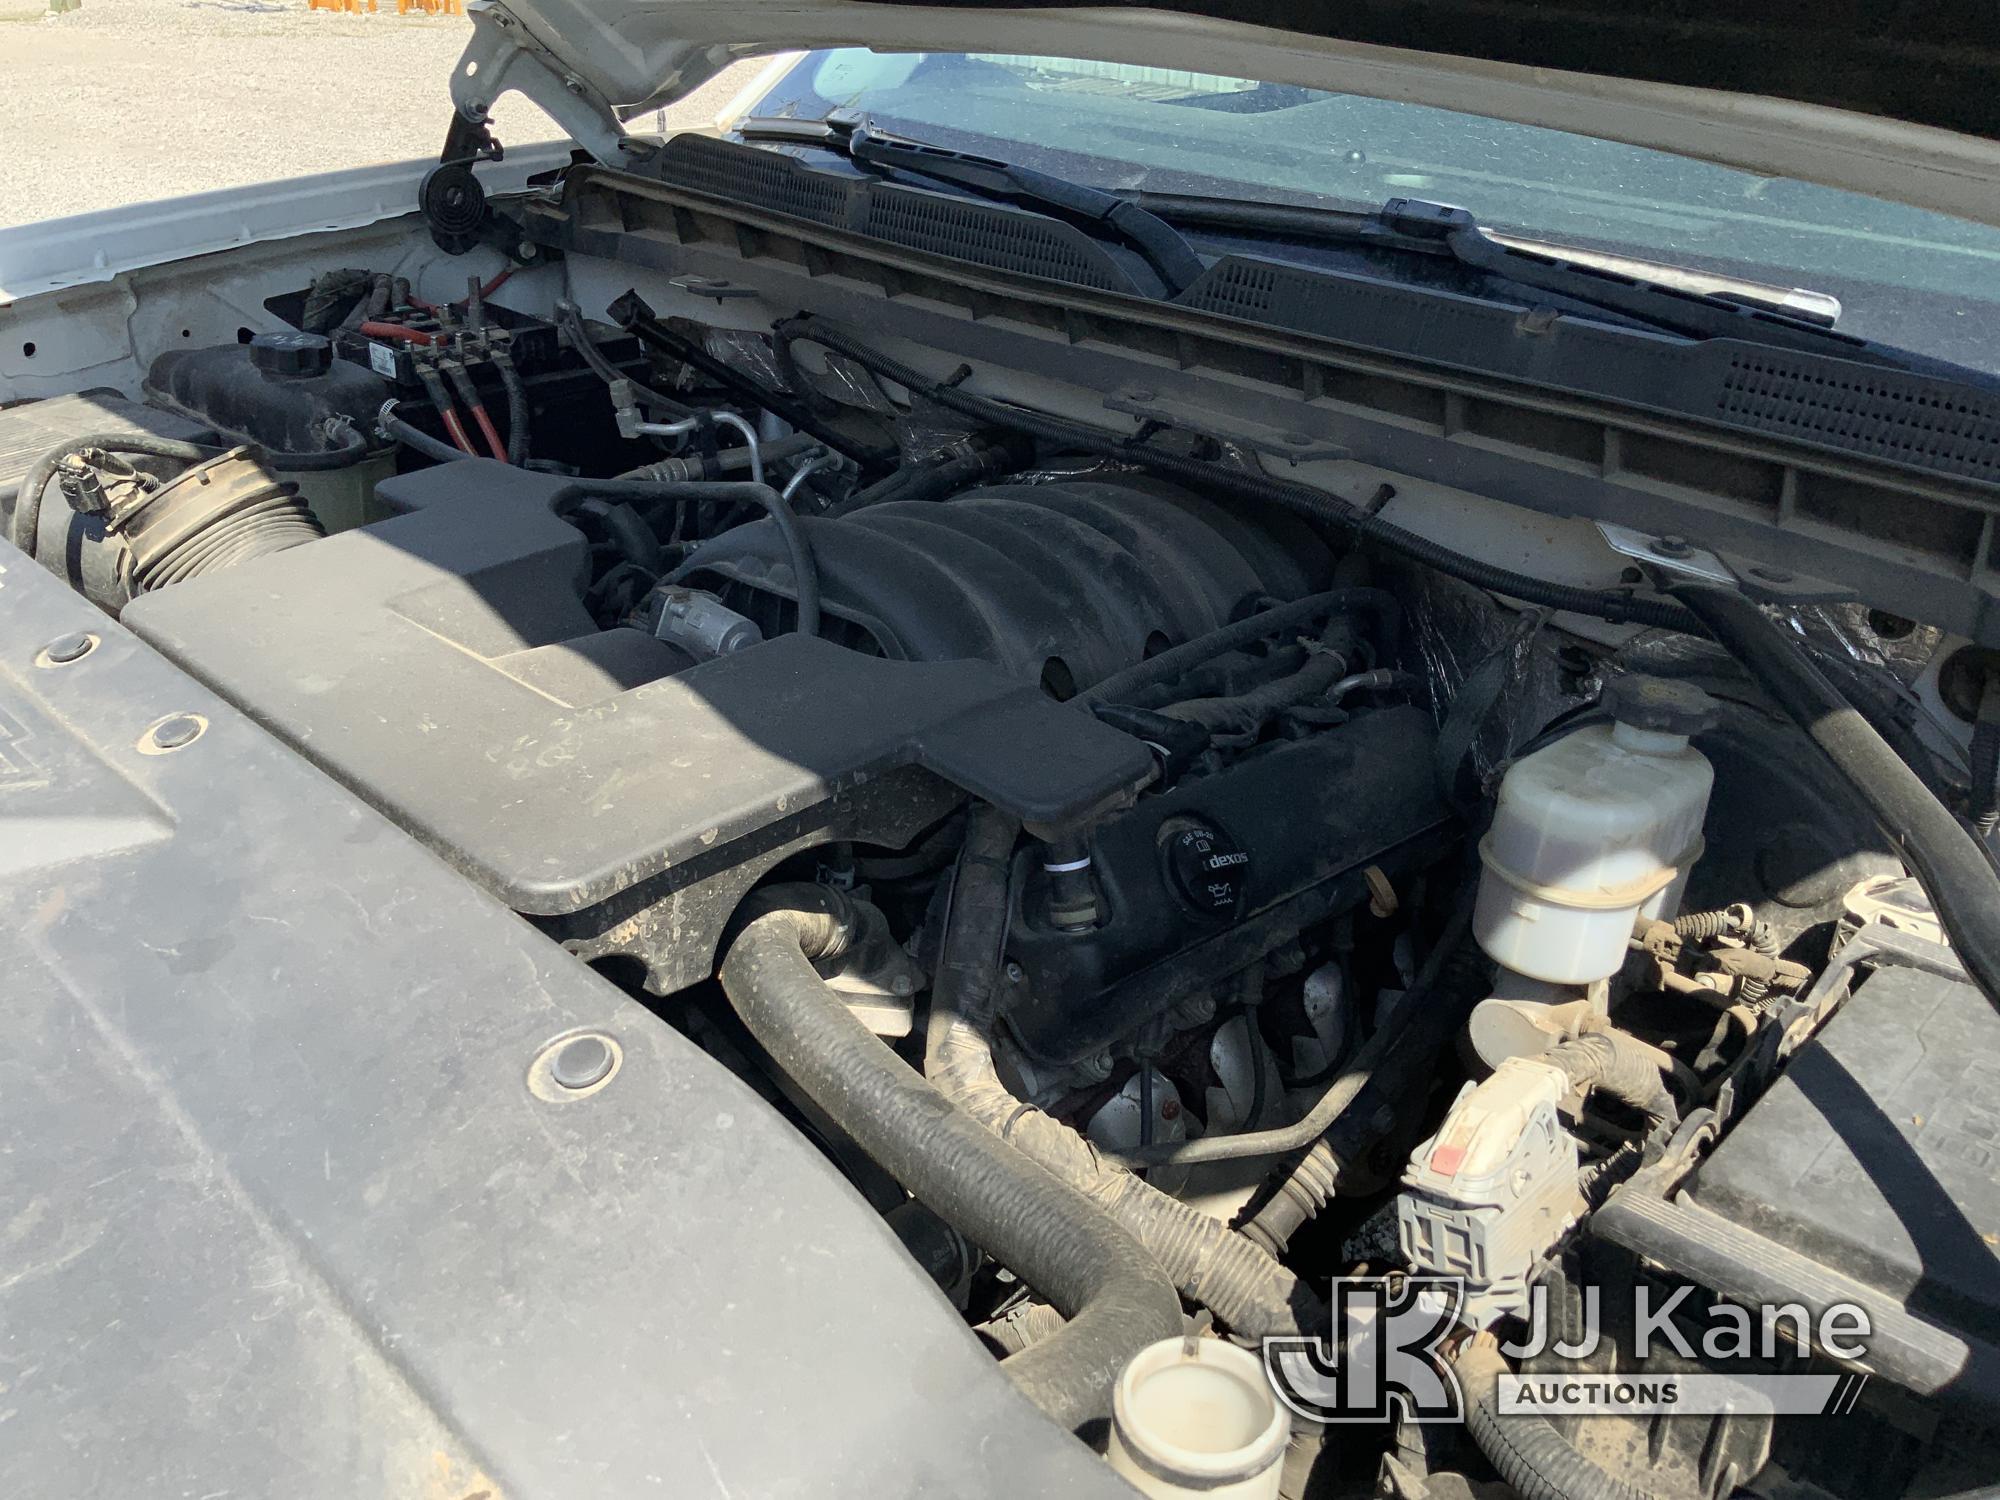 (Fort Wayne, IN) 2018 Chevrolet Silverado K1500 4X4 Extended-Cab Pickup Truck Not Running, Condition